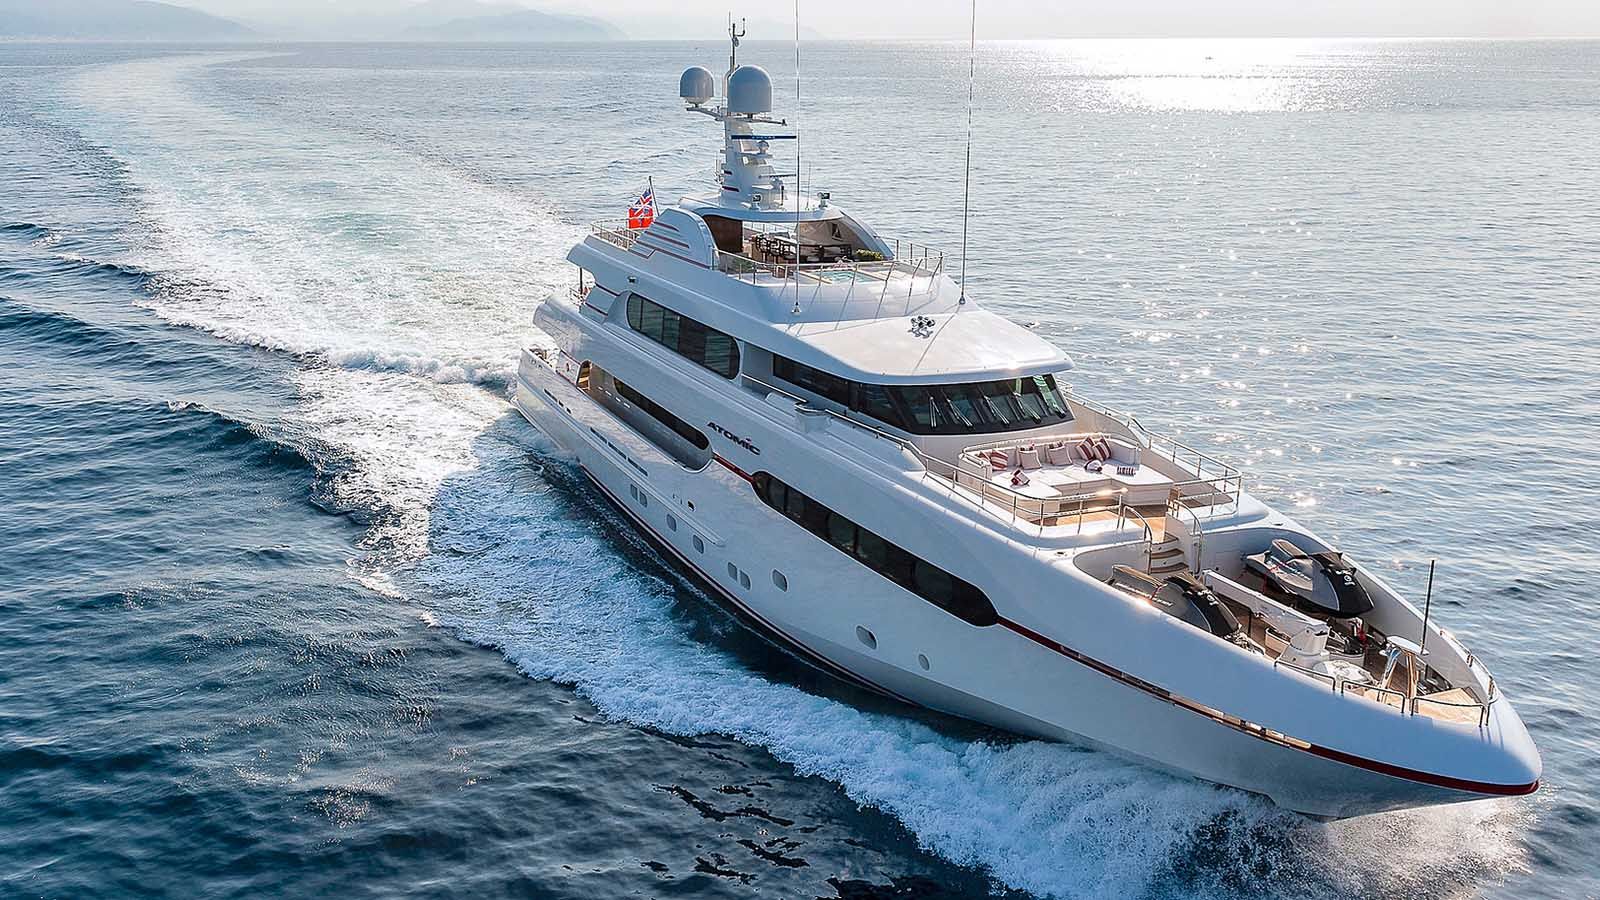 vervece yacht for sale price